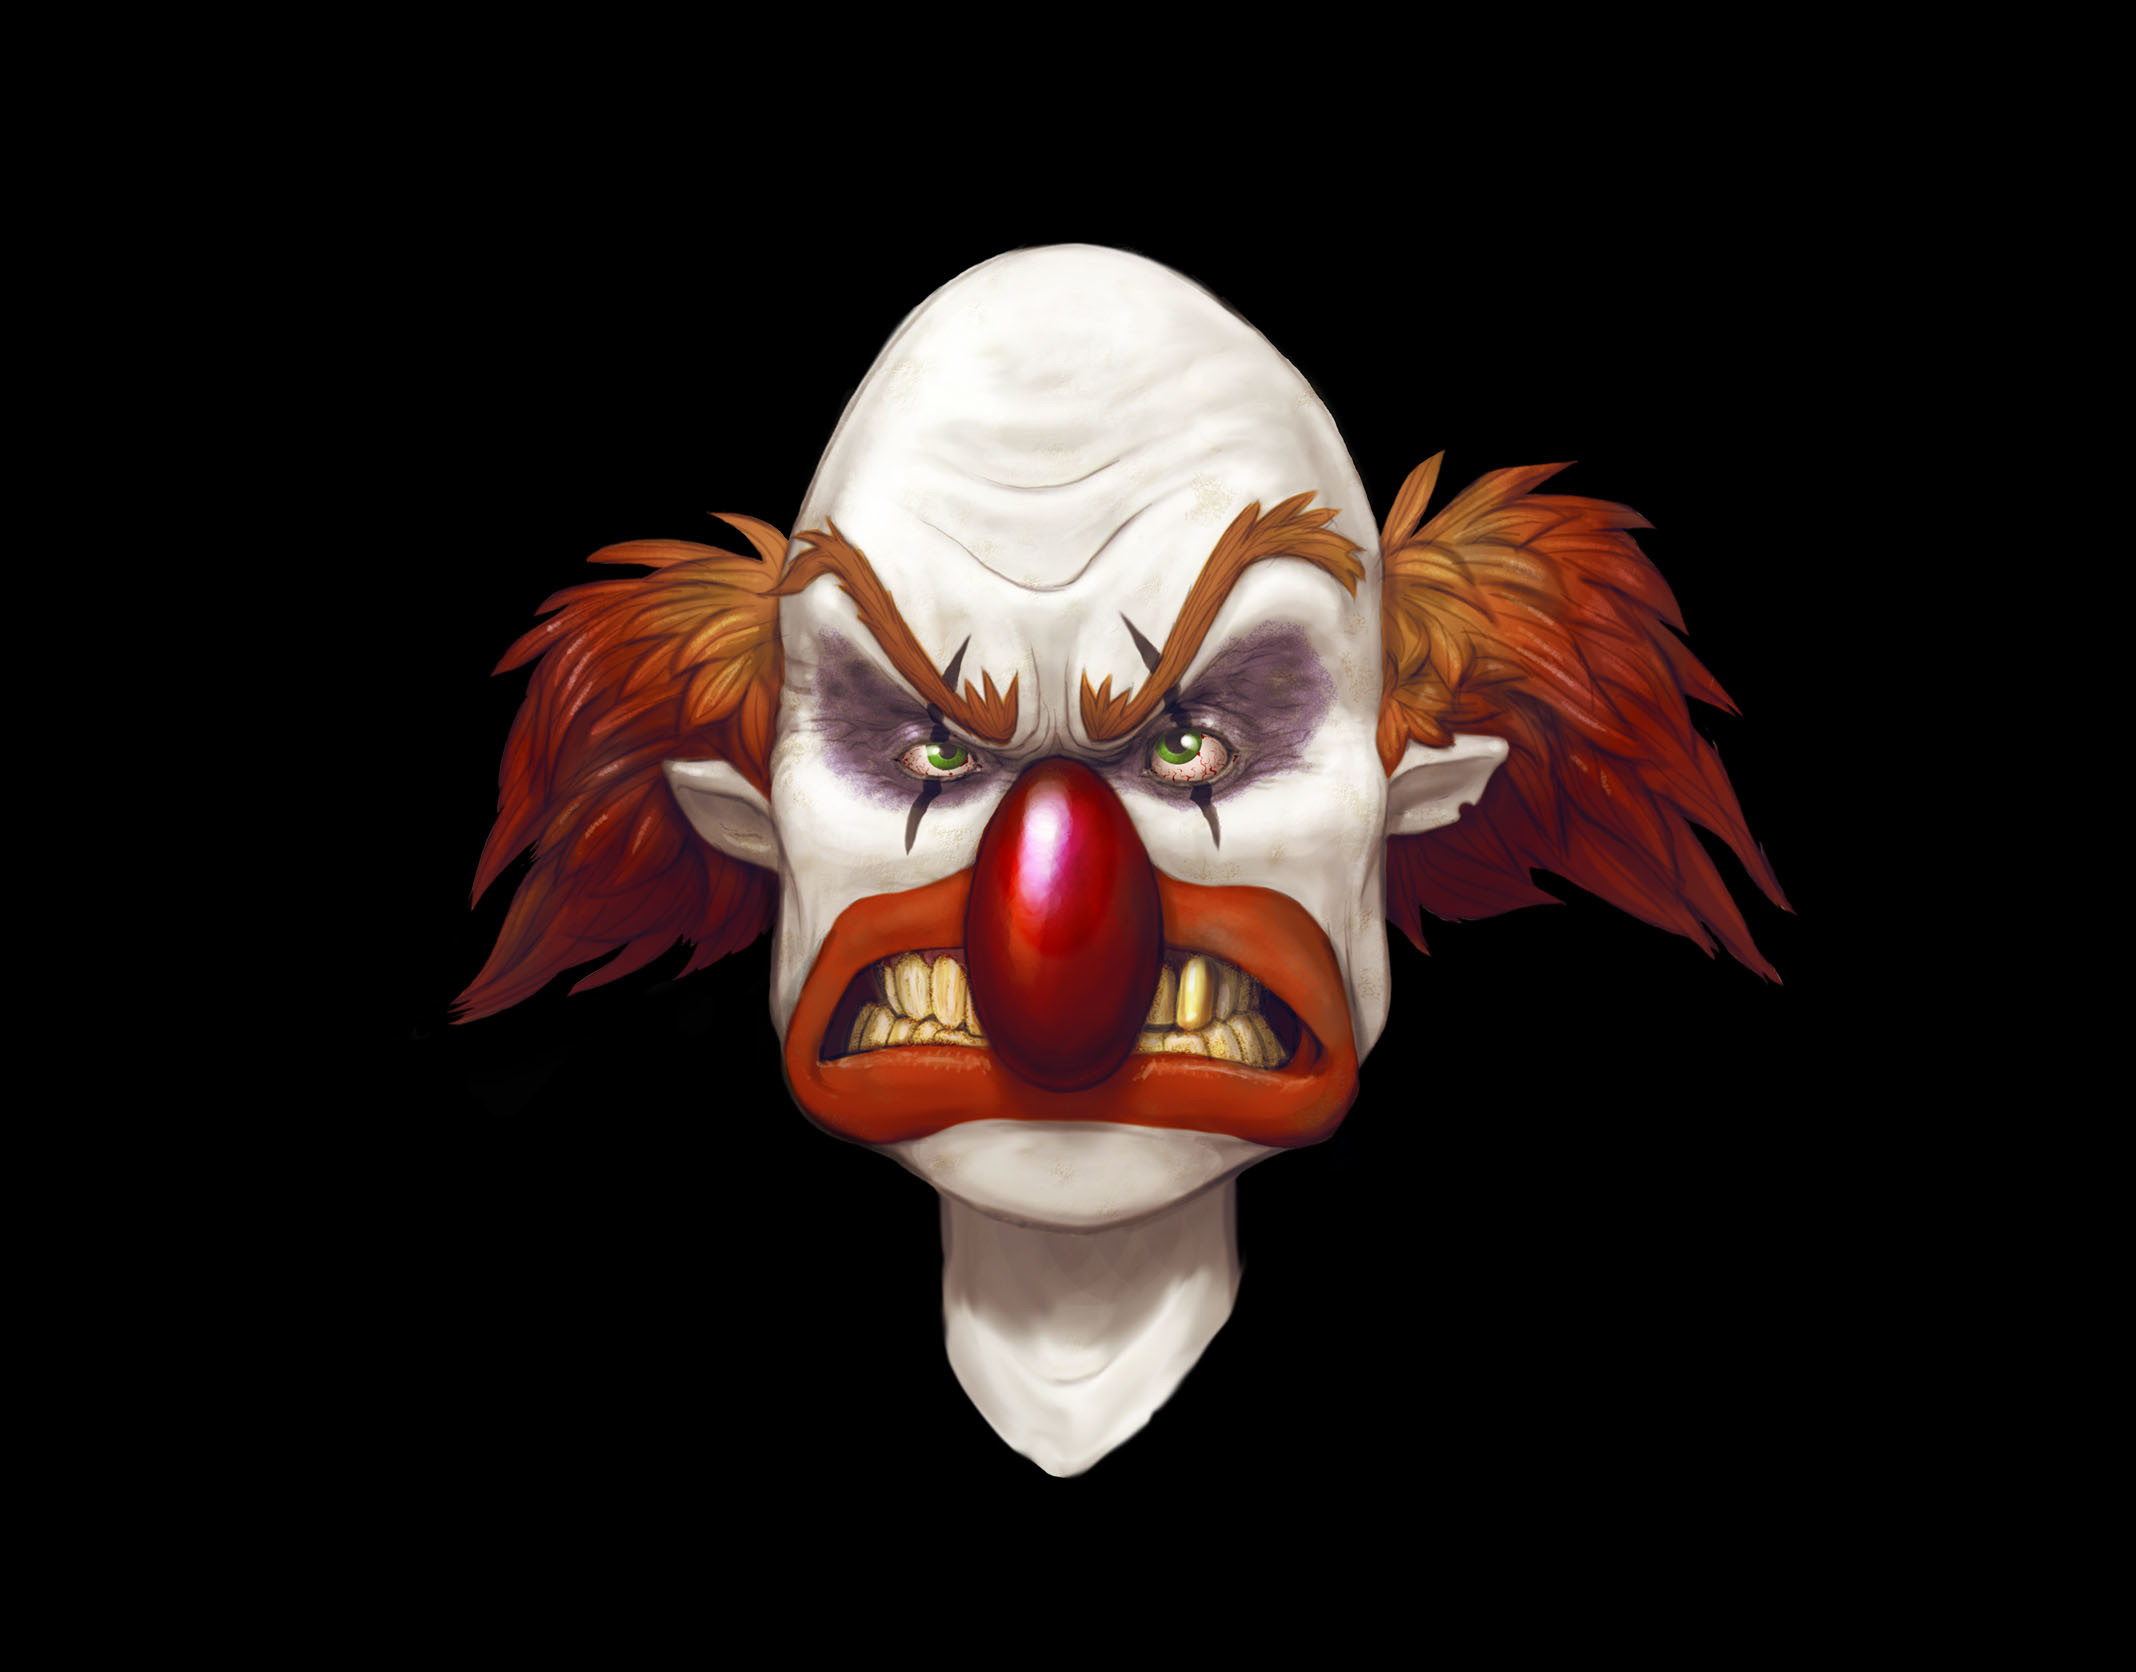 2136x1672 Evil Clown No 1 wallpaper from Clowns wallpapers